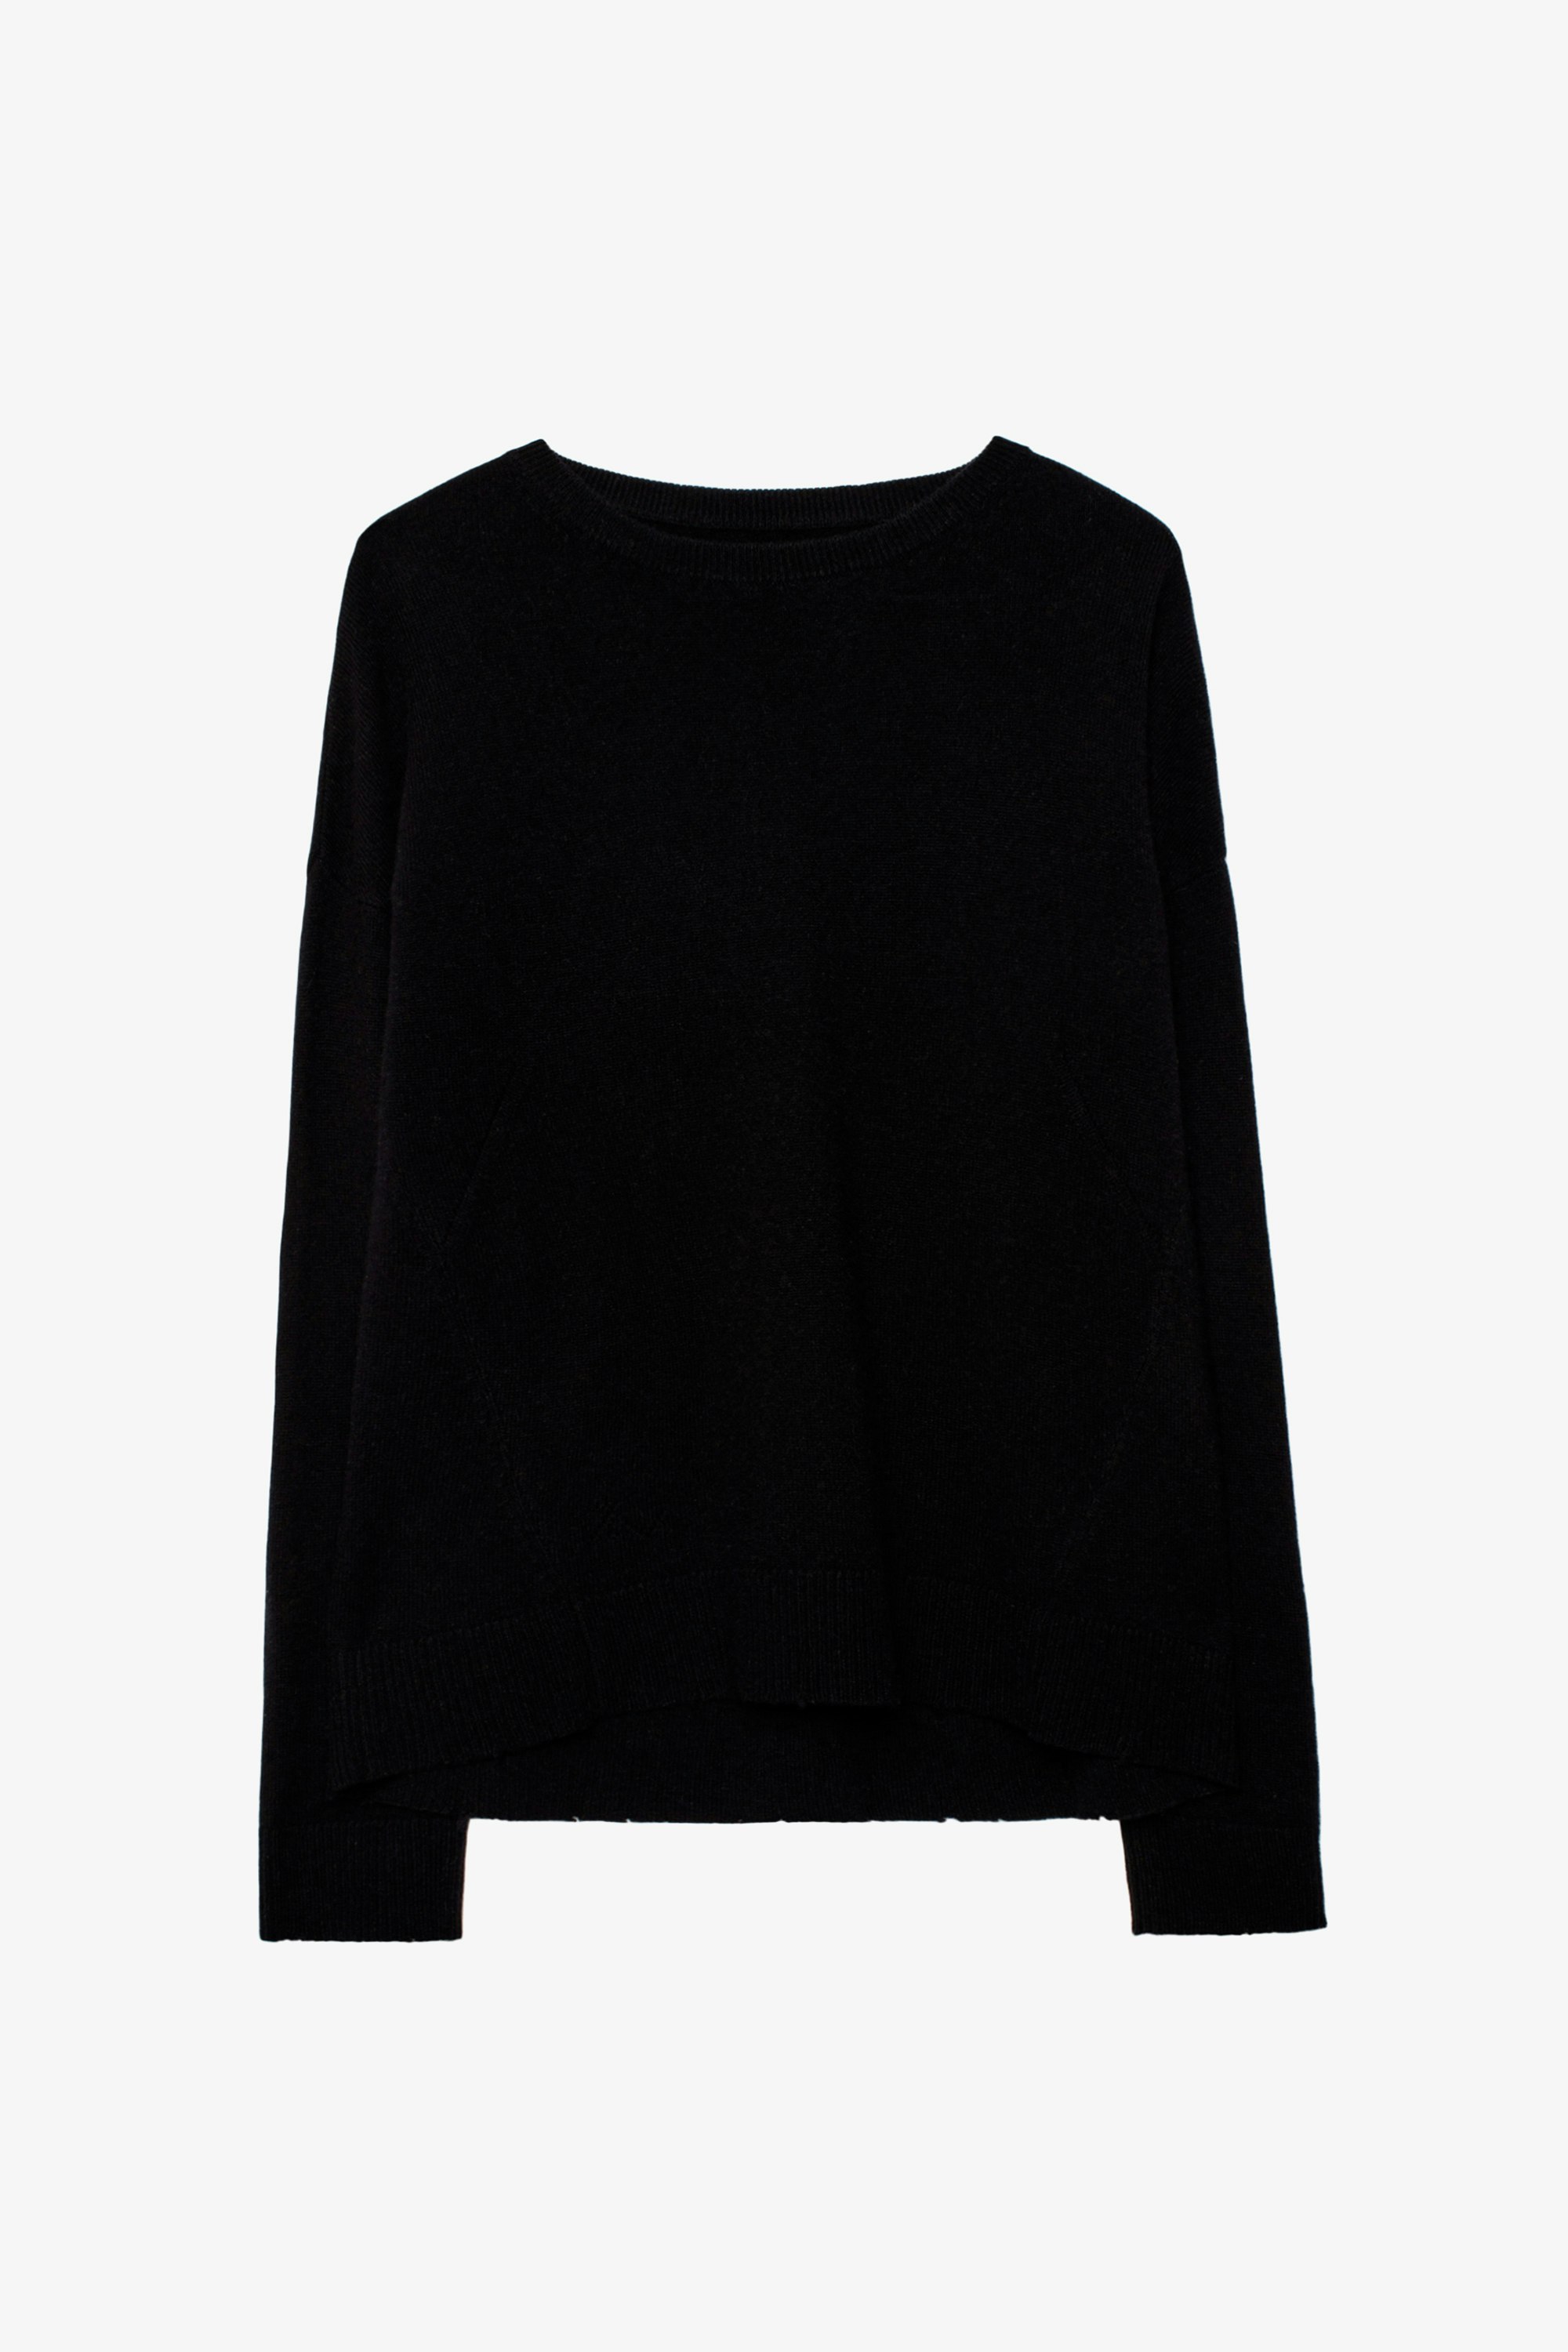 Cici パッチカシミヤＴシャツ - Women’s black cashmere sweater